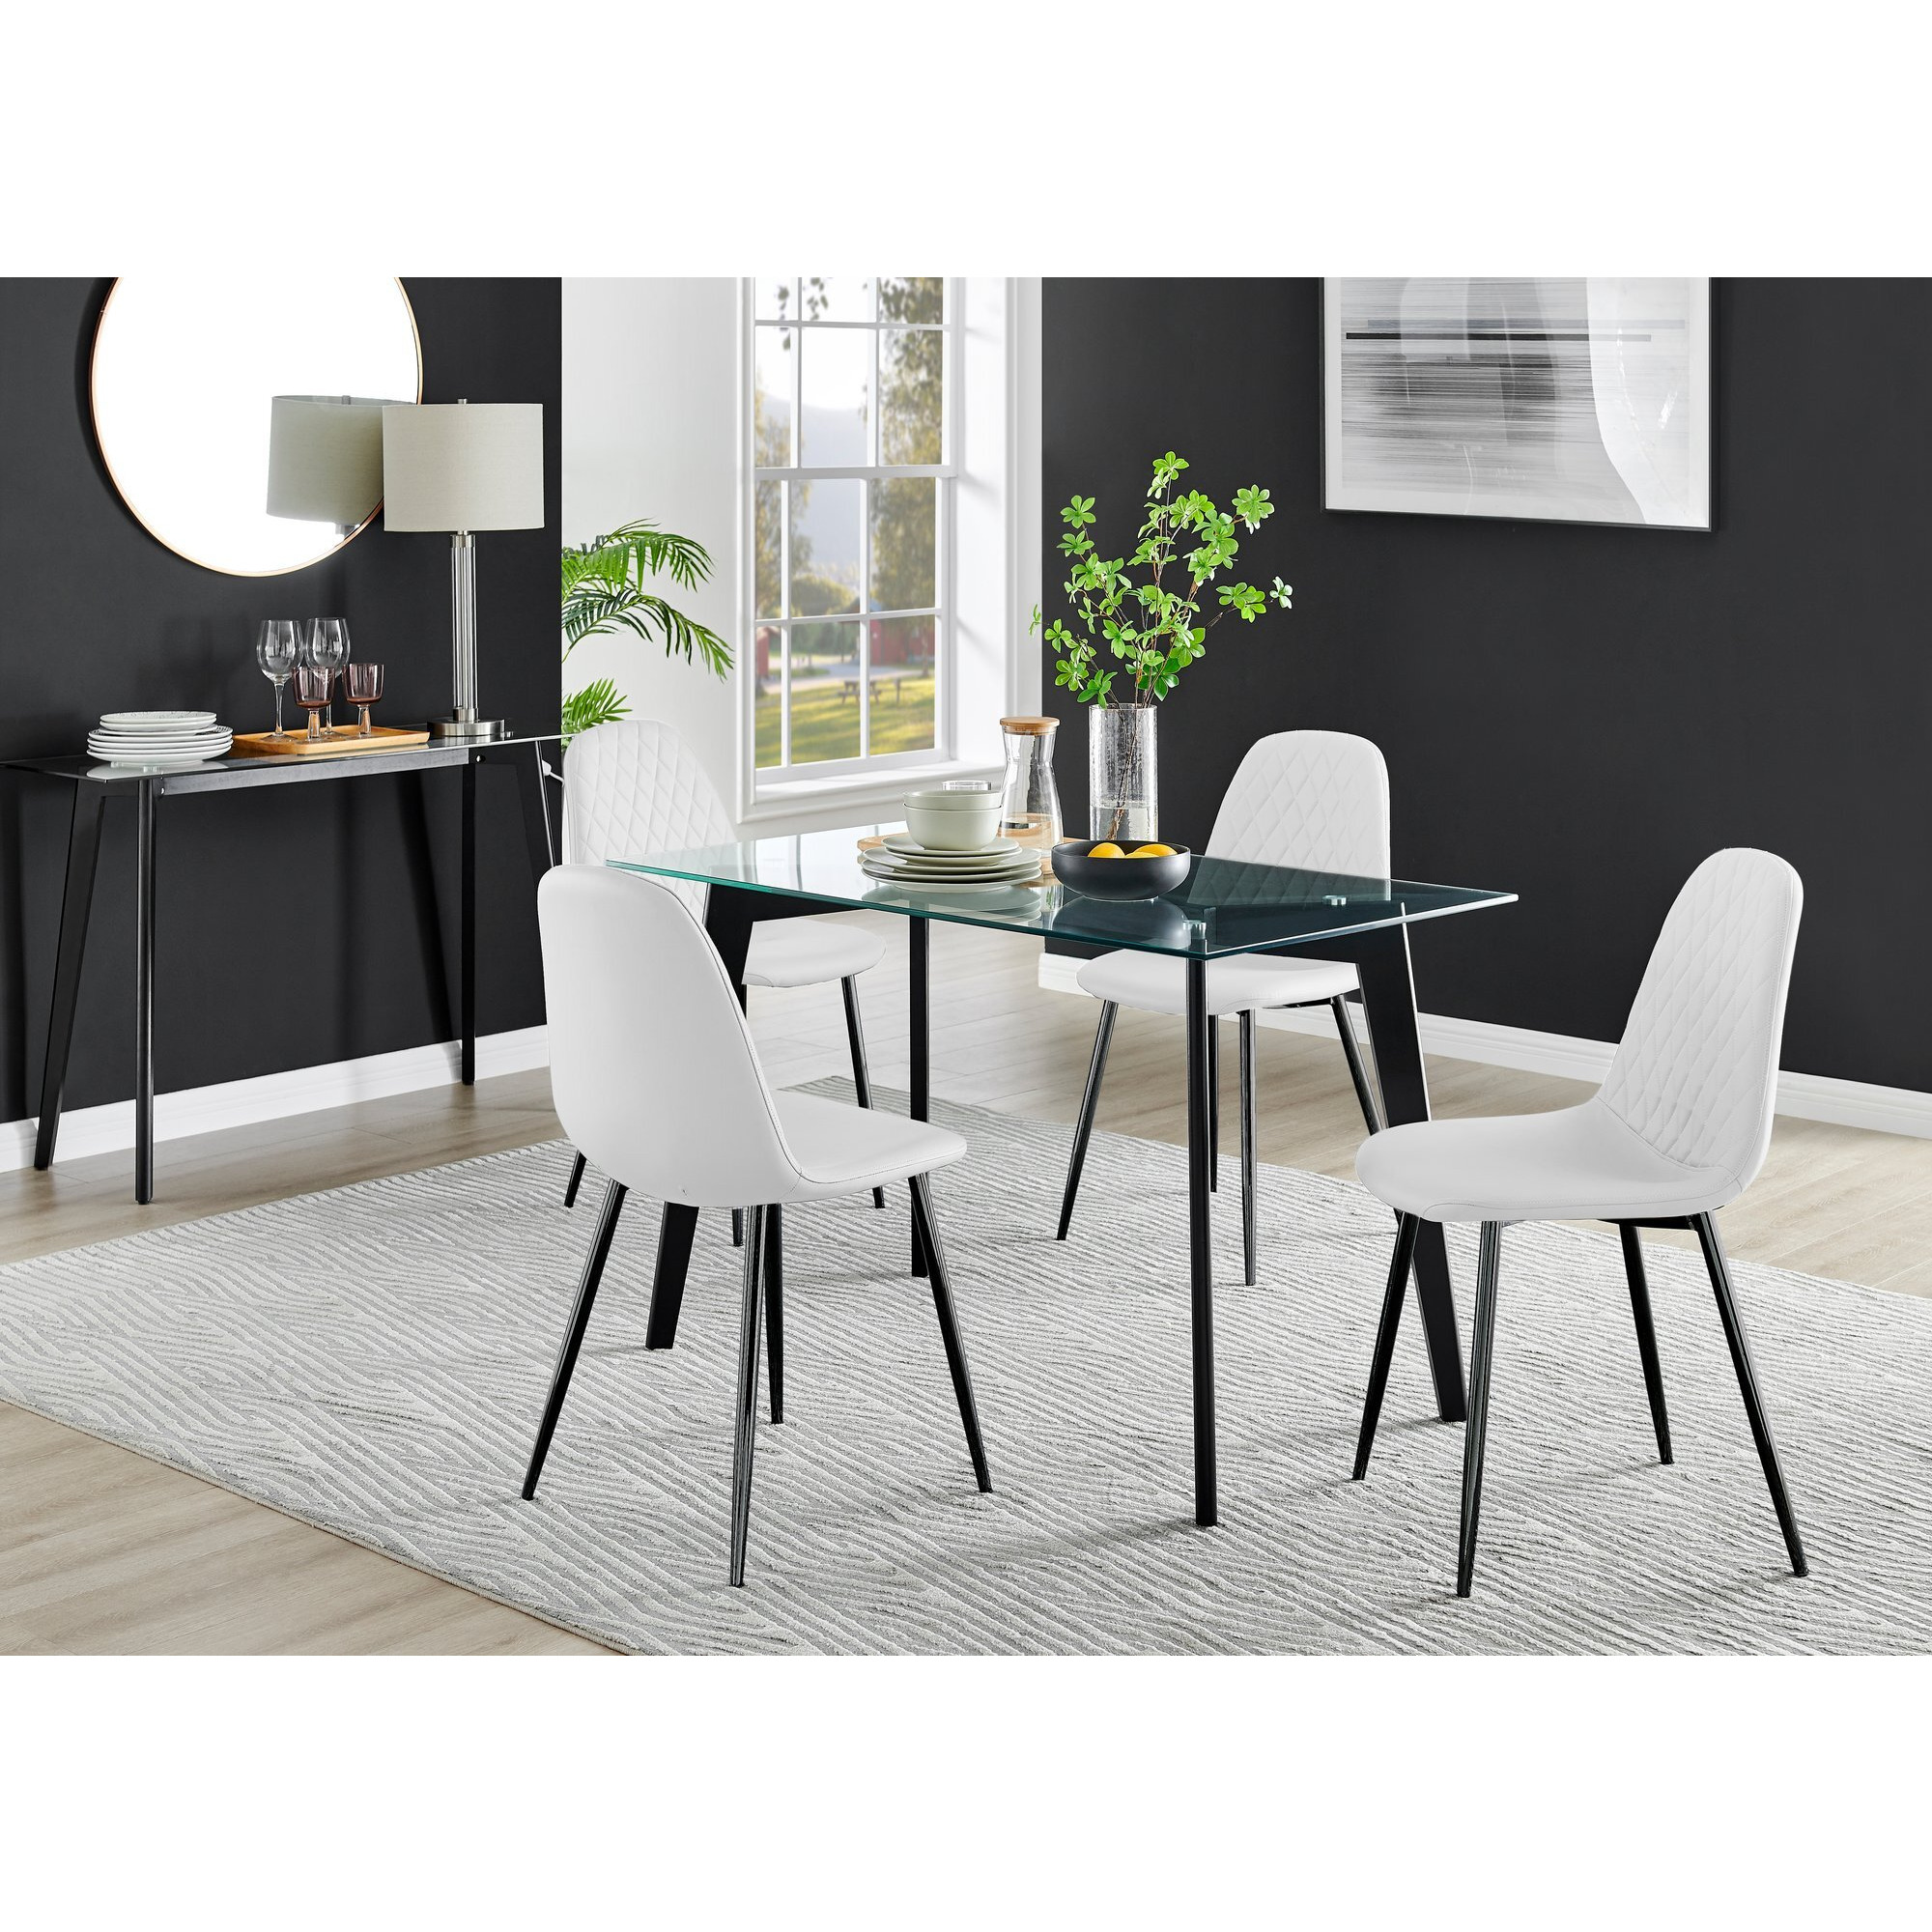 Malmo Glass and Black Leg Dining Table & 4 Corona Black Leg Chairs